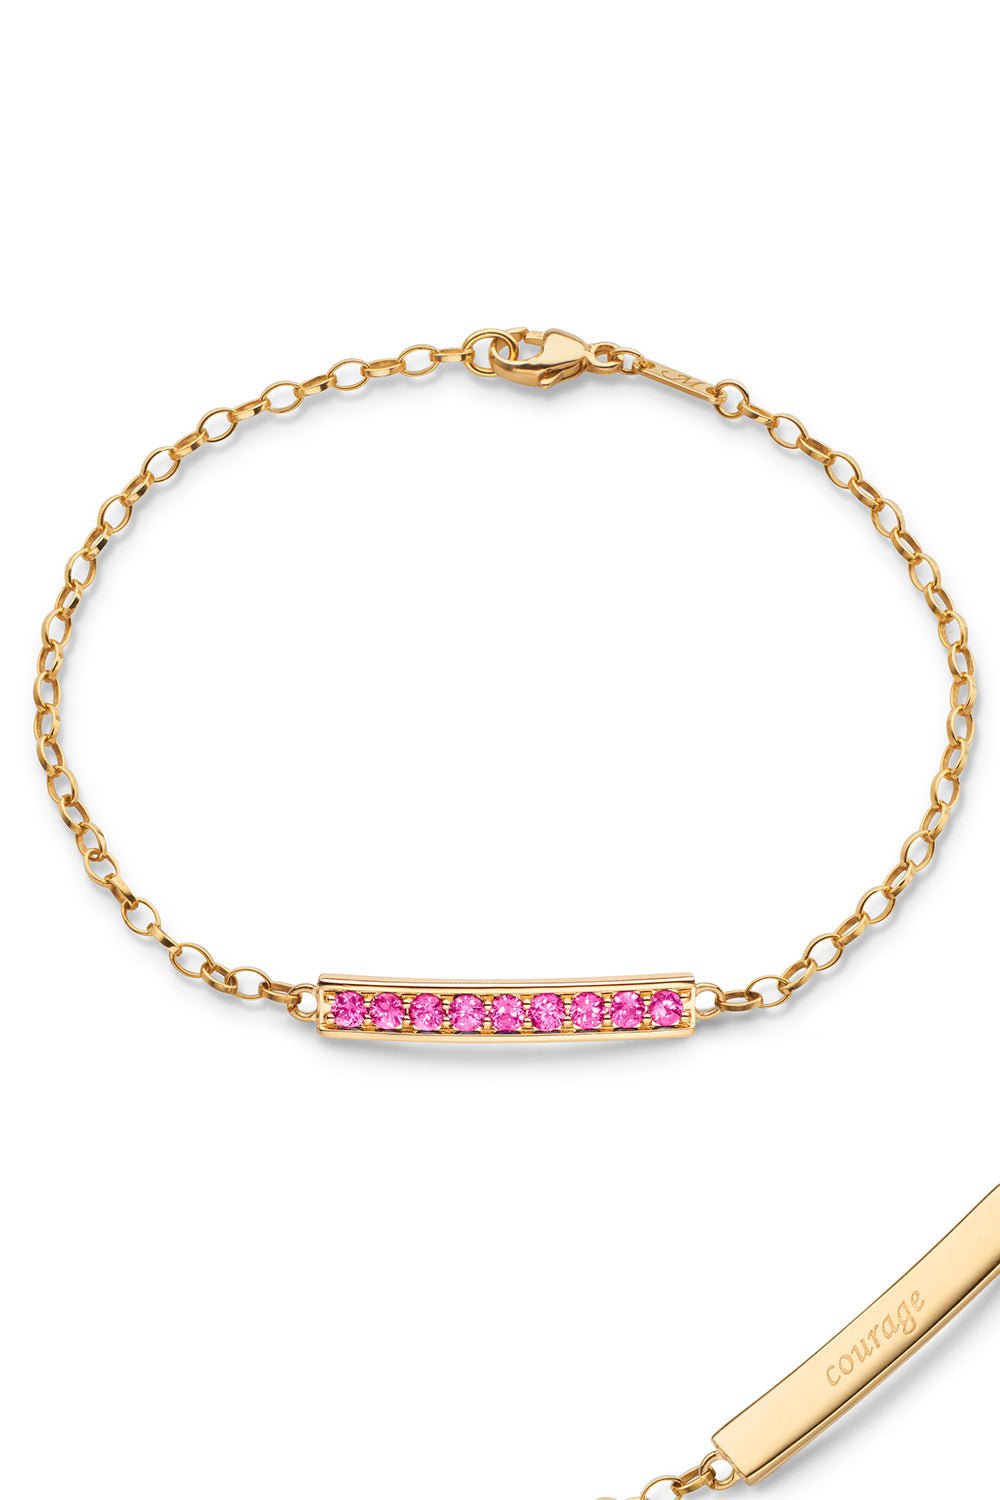 MONICA RICH KOSANN-Pink Sapphire Courage Bracelet-YELLOW GOLD